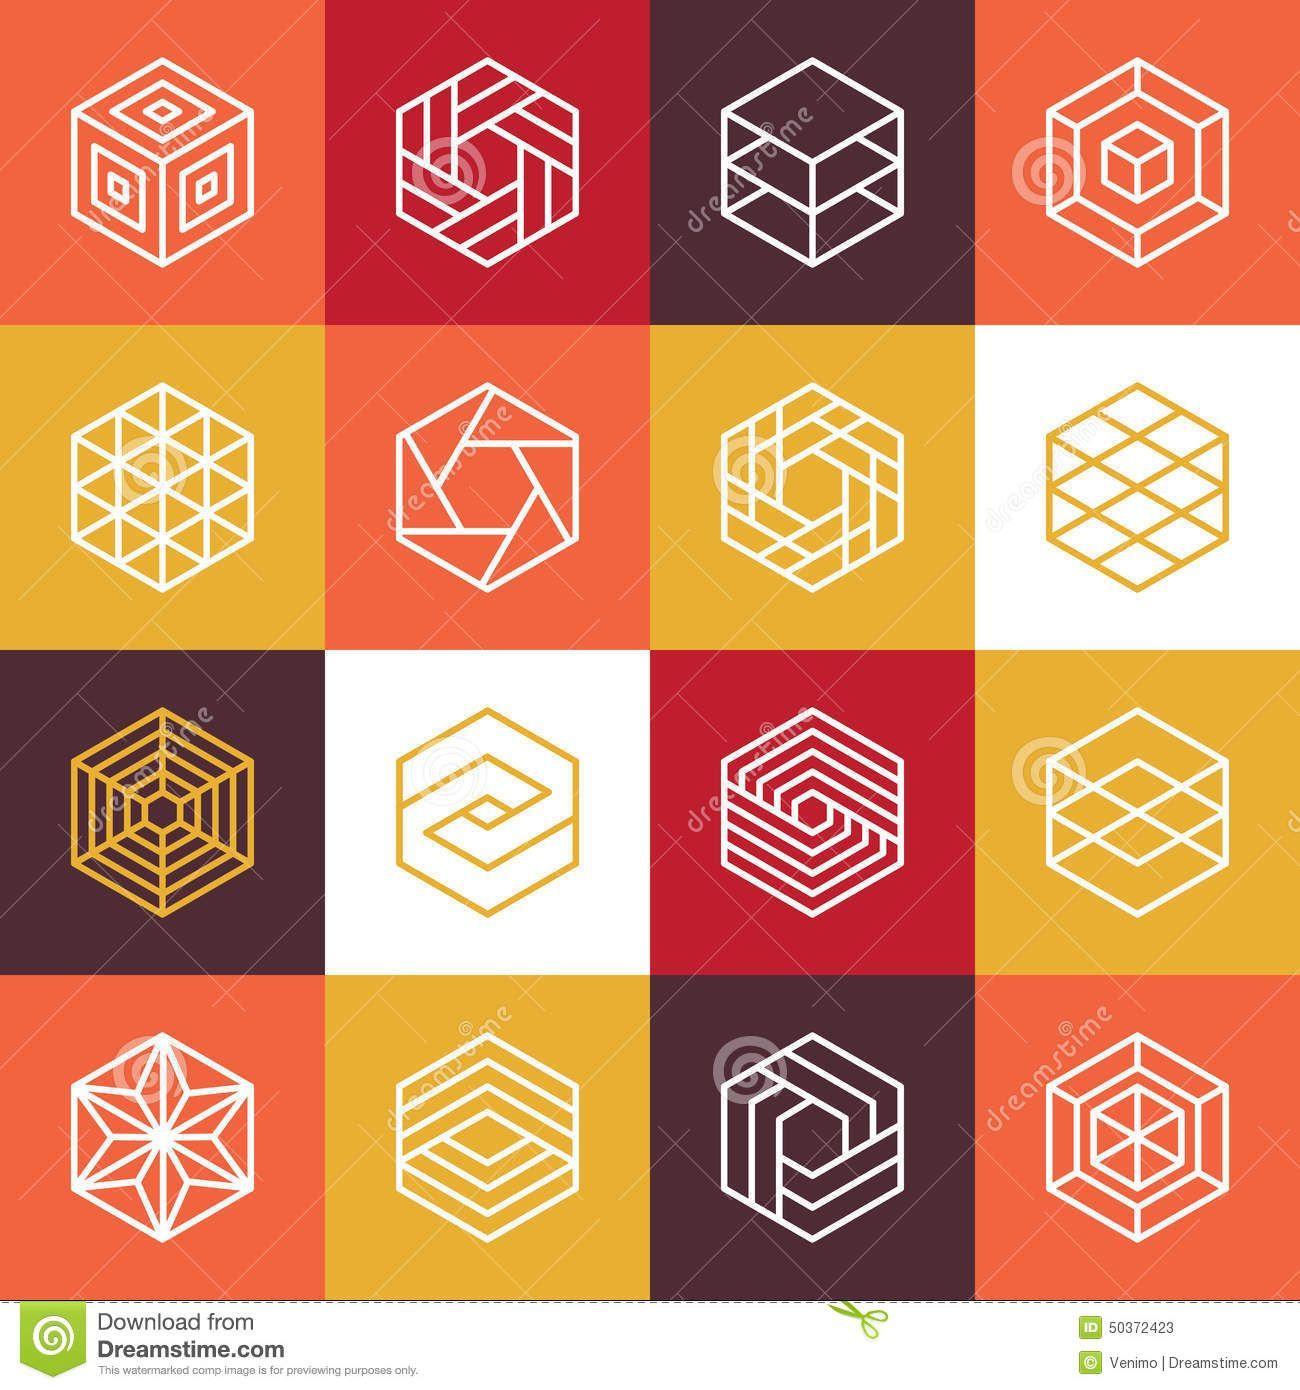 Hexagon Corporate Logo - Vector Linear Hexagon Logos And Design Elements From Over